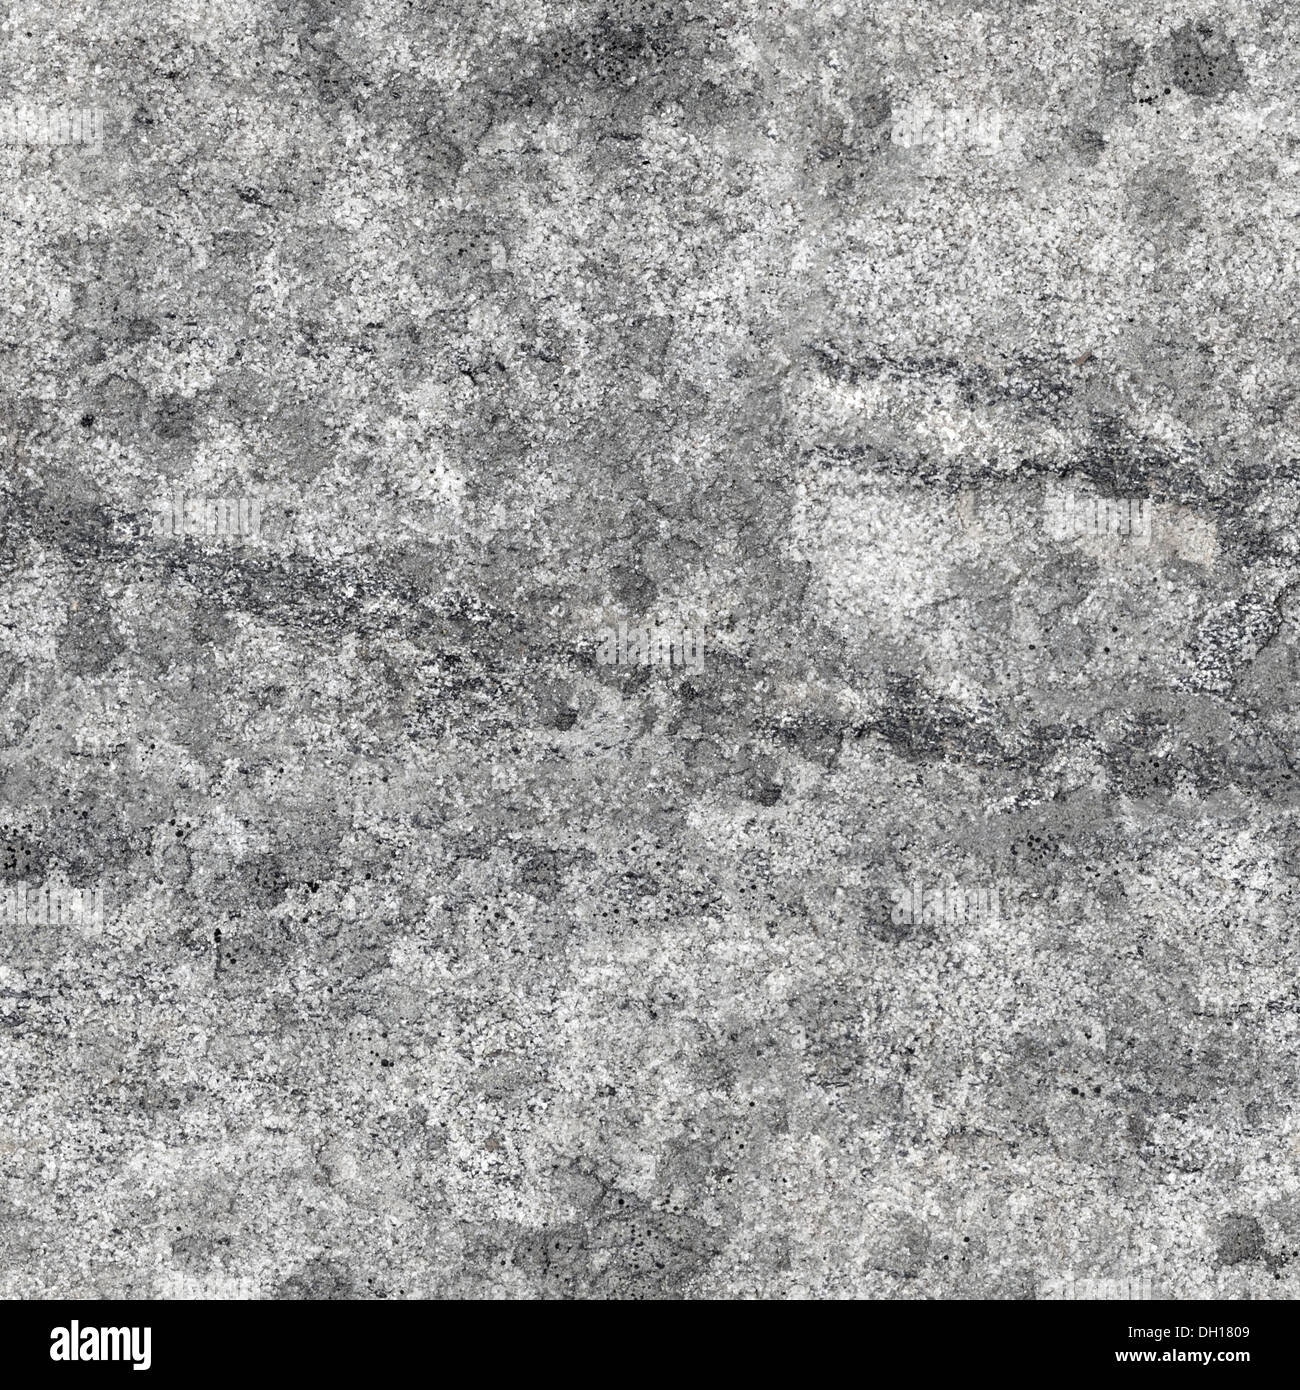 Seamless texture - gray granite rock with lichen Stock Photo